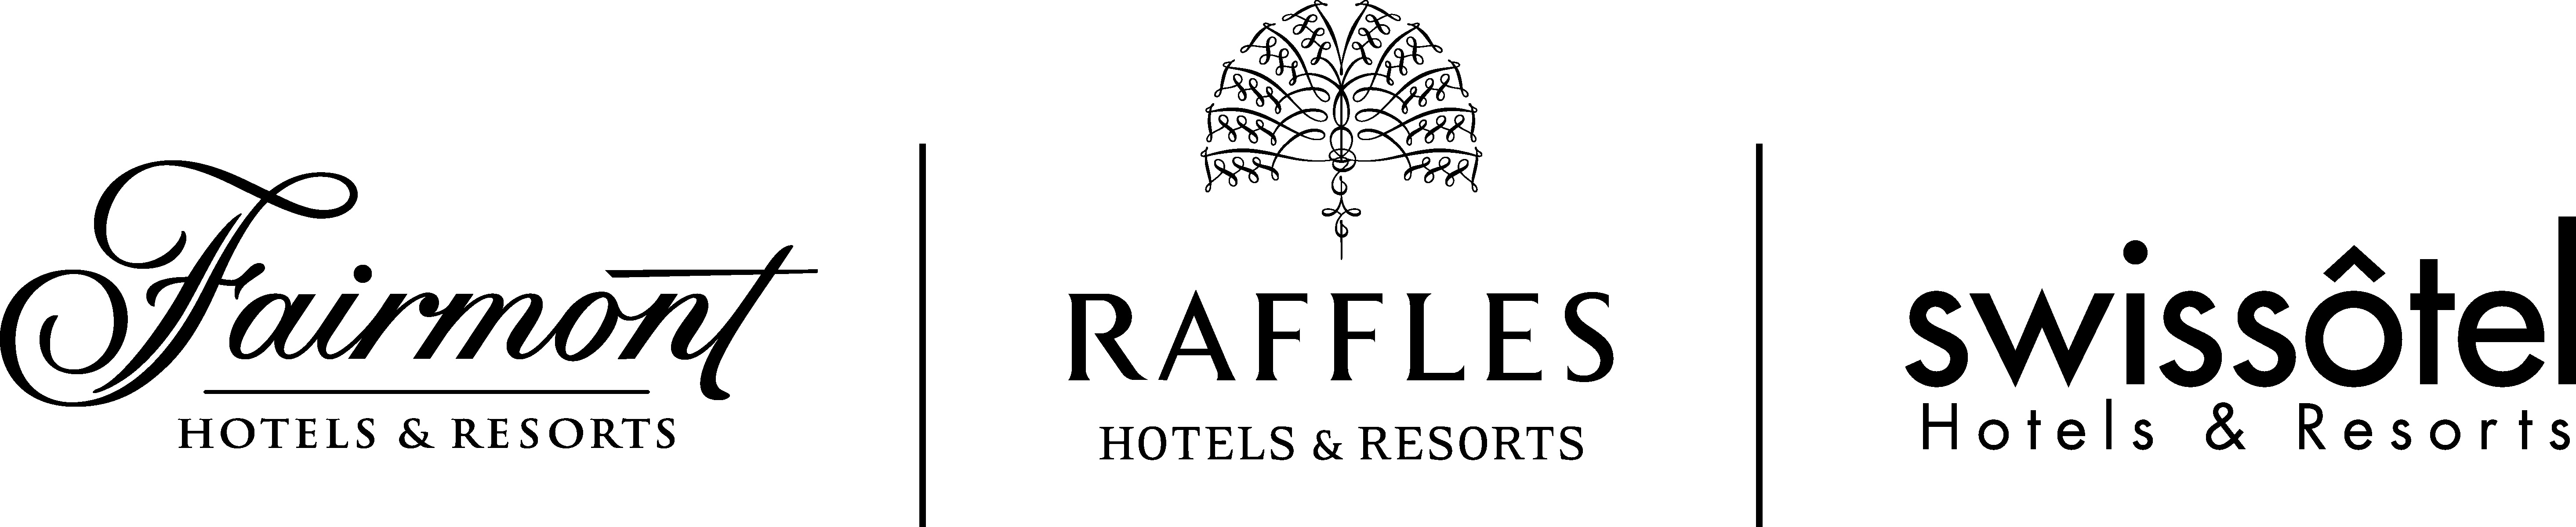 Fairmont Raffles Swissotel logos